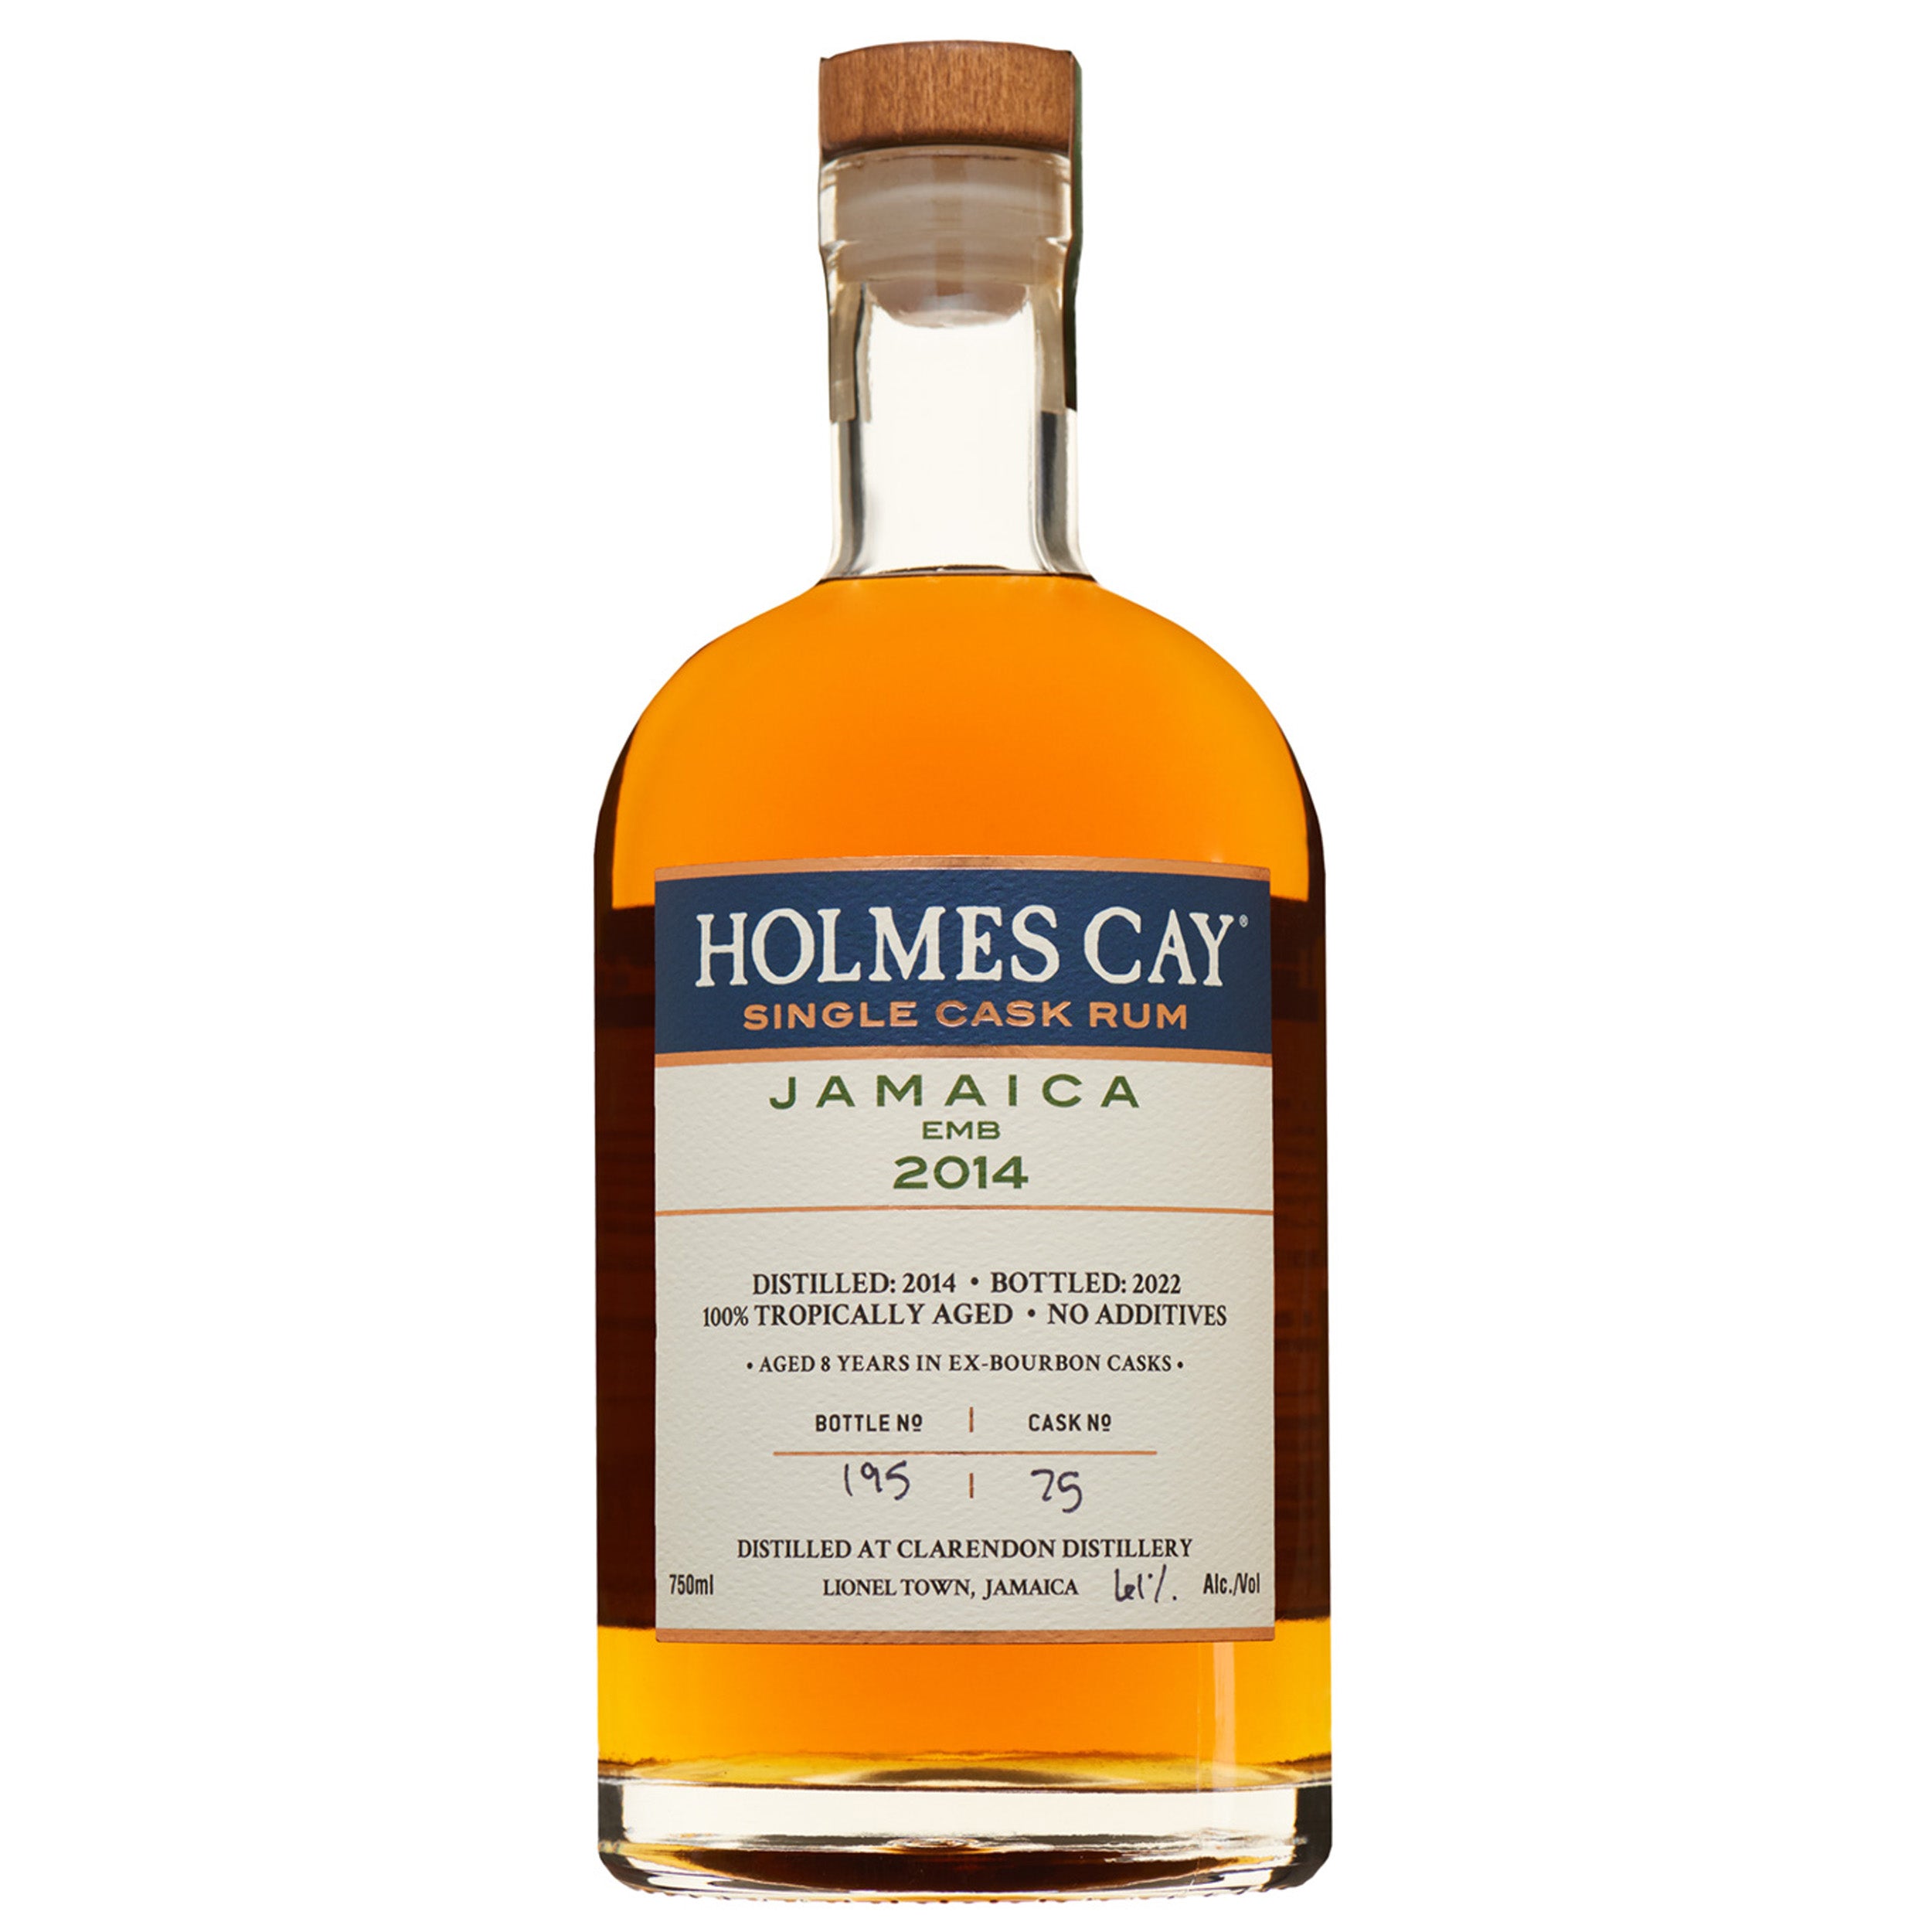 Holmes Cay Jamaica EMB 2014 Rum